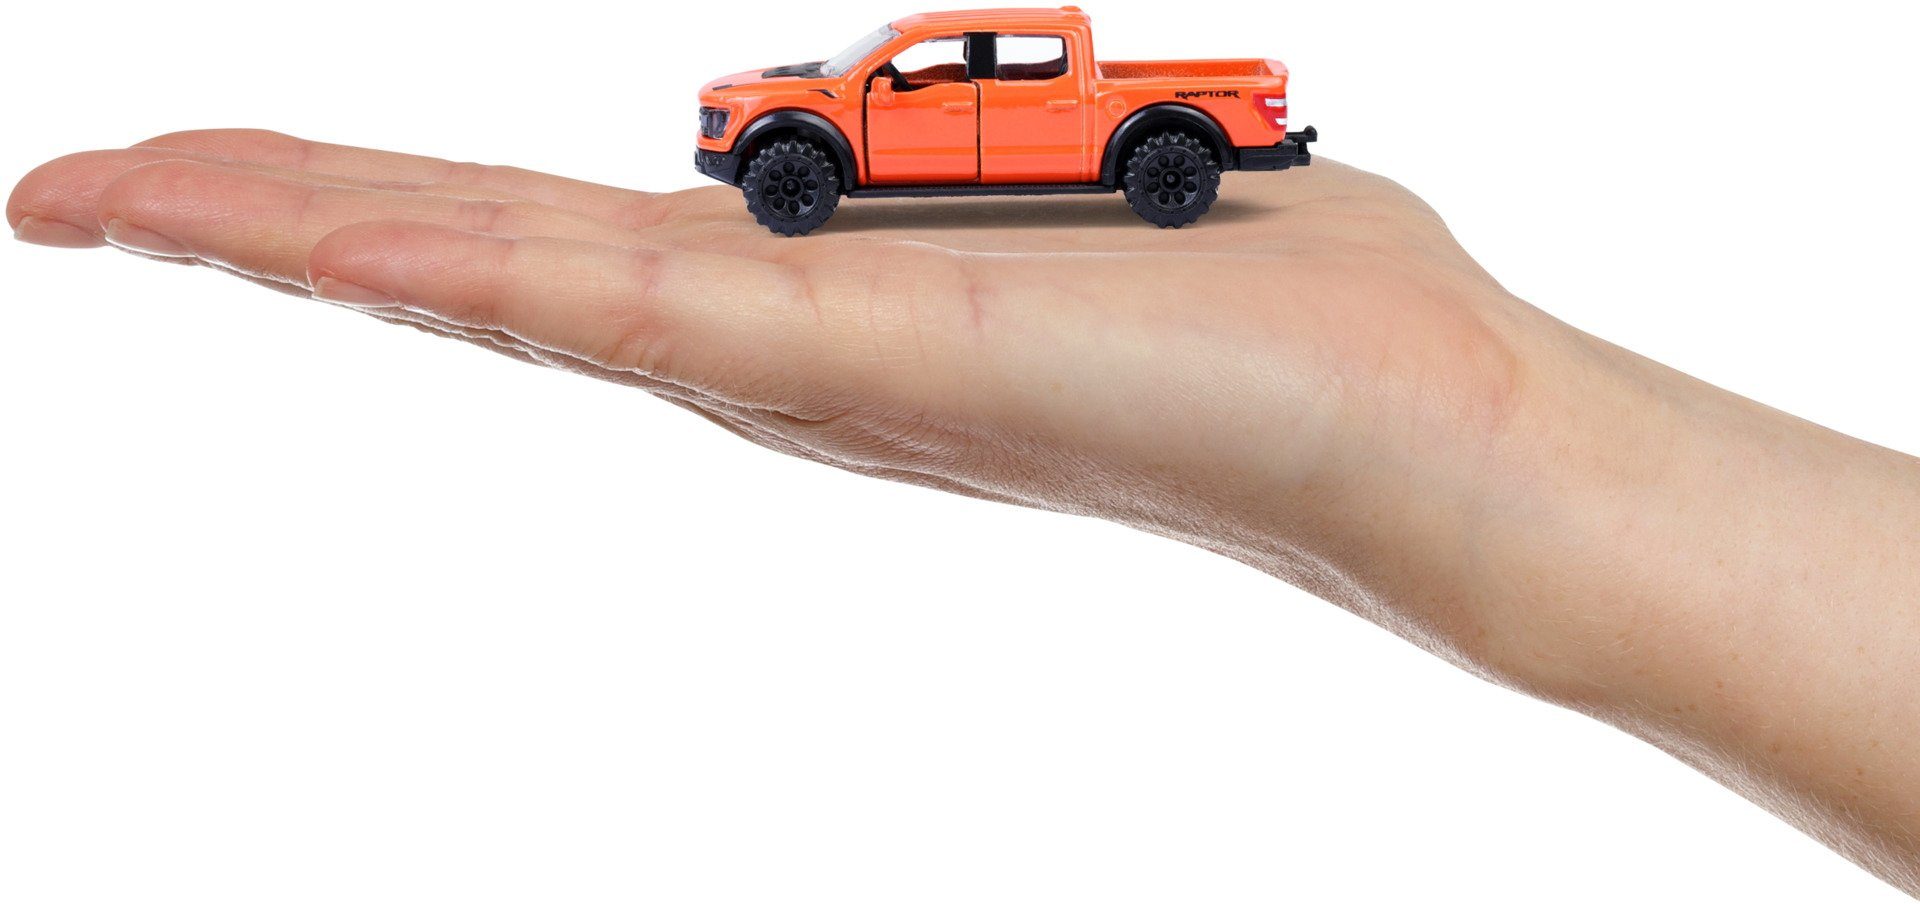 F-150 Spielzeugauto 212053052Q39 Ford Raptor Premium majORETTE orange Cars Spielzeug-Auto